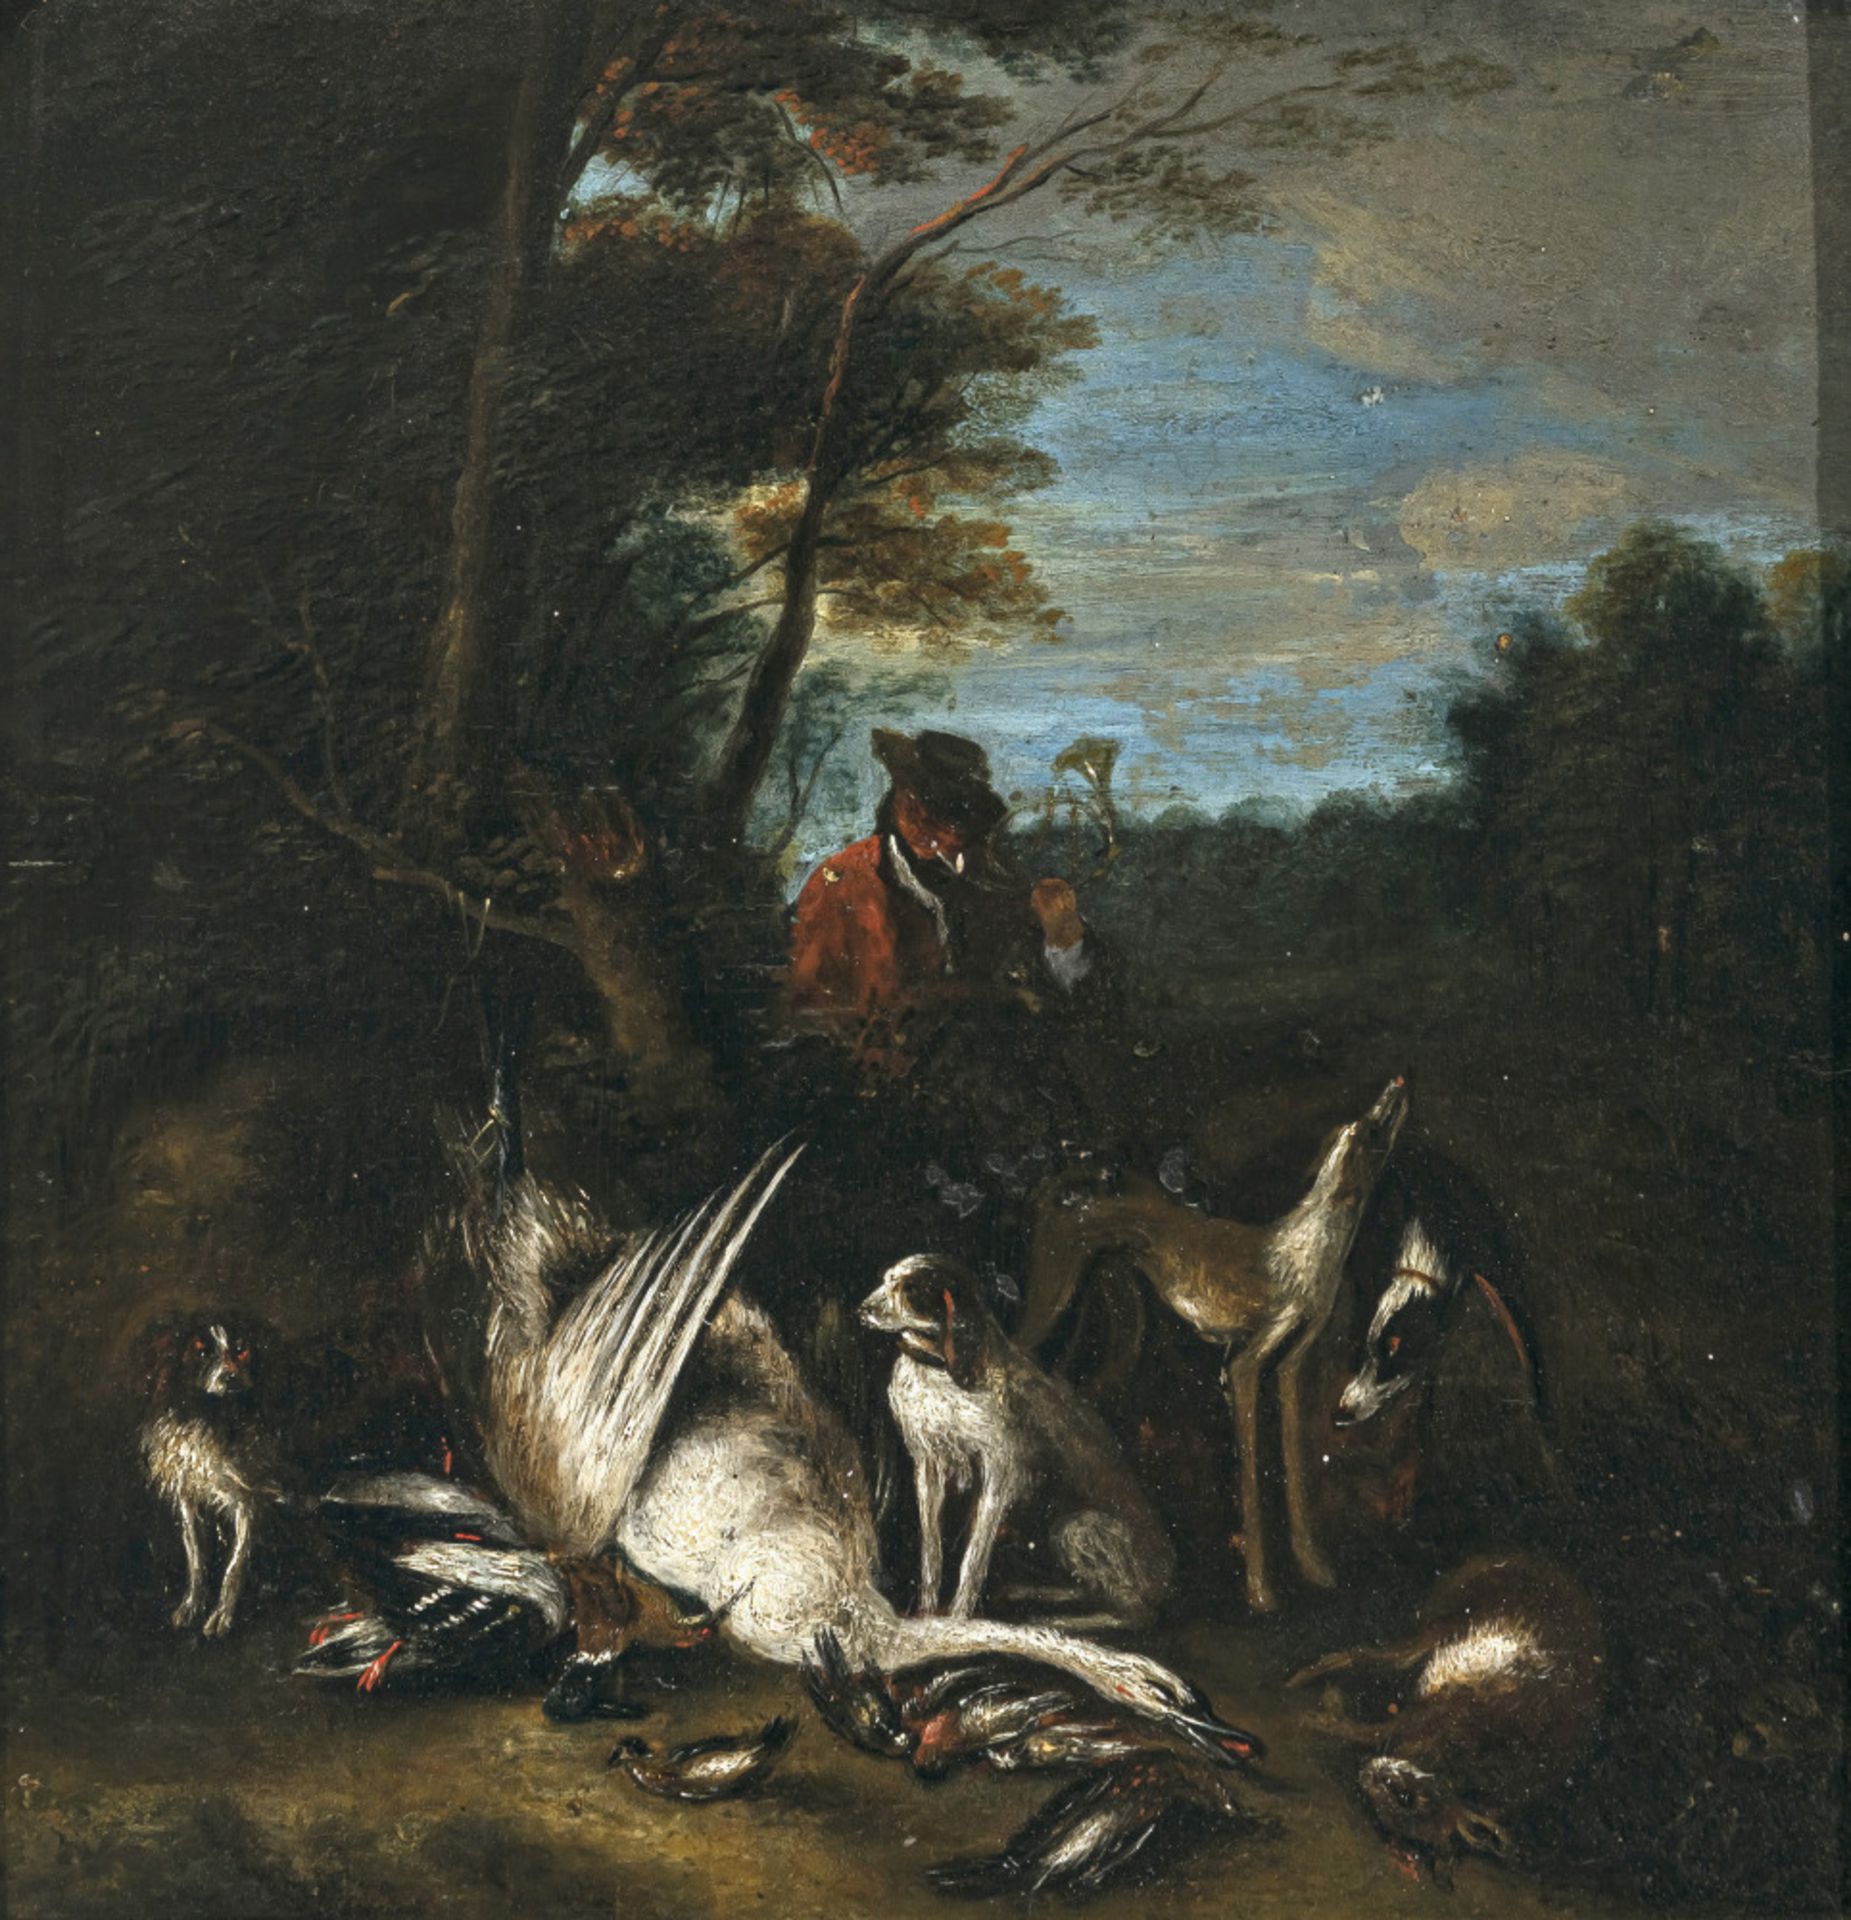 Flämisch 17th/18th century - Hunter with hounds and dead birds